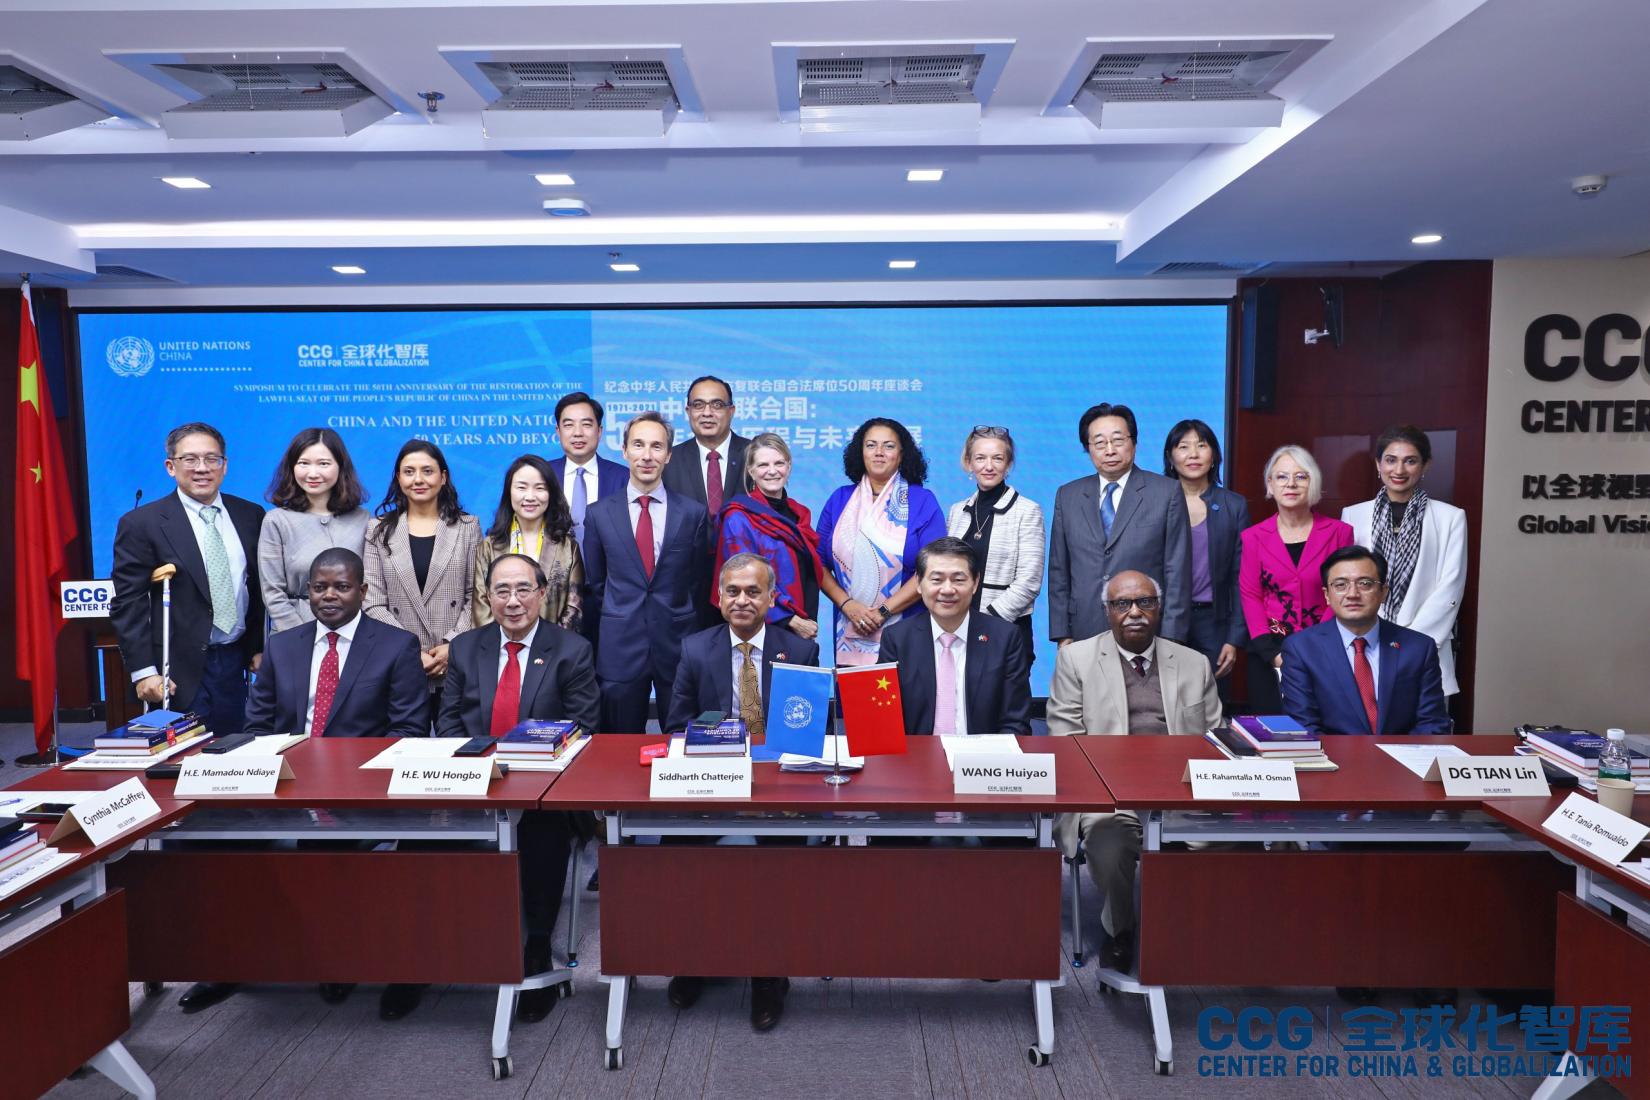 Participants at UN in China/CCG Symposium